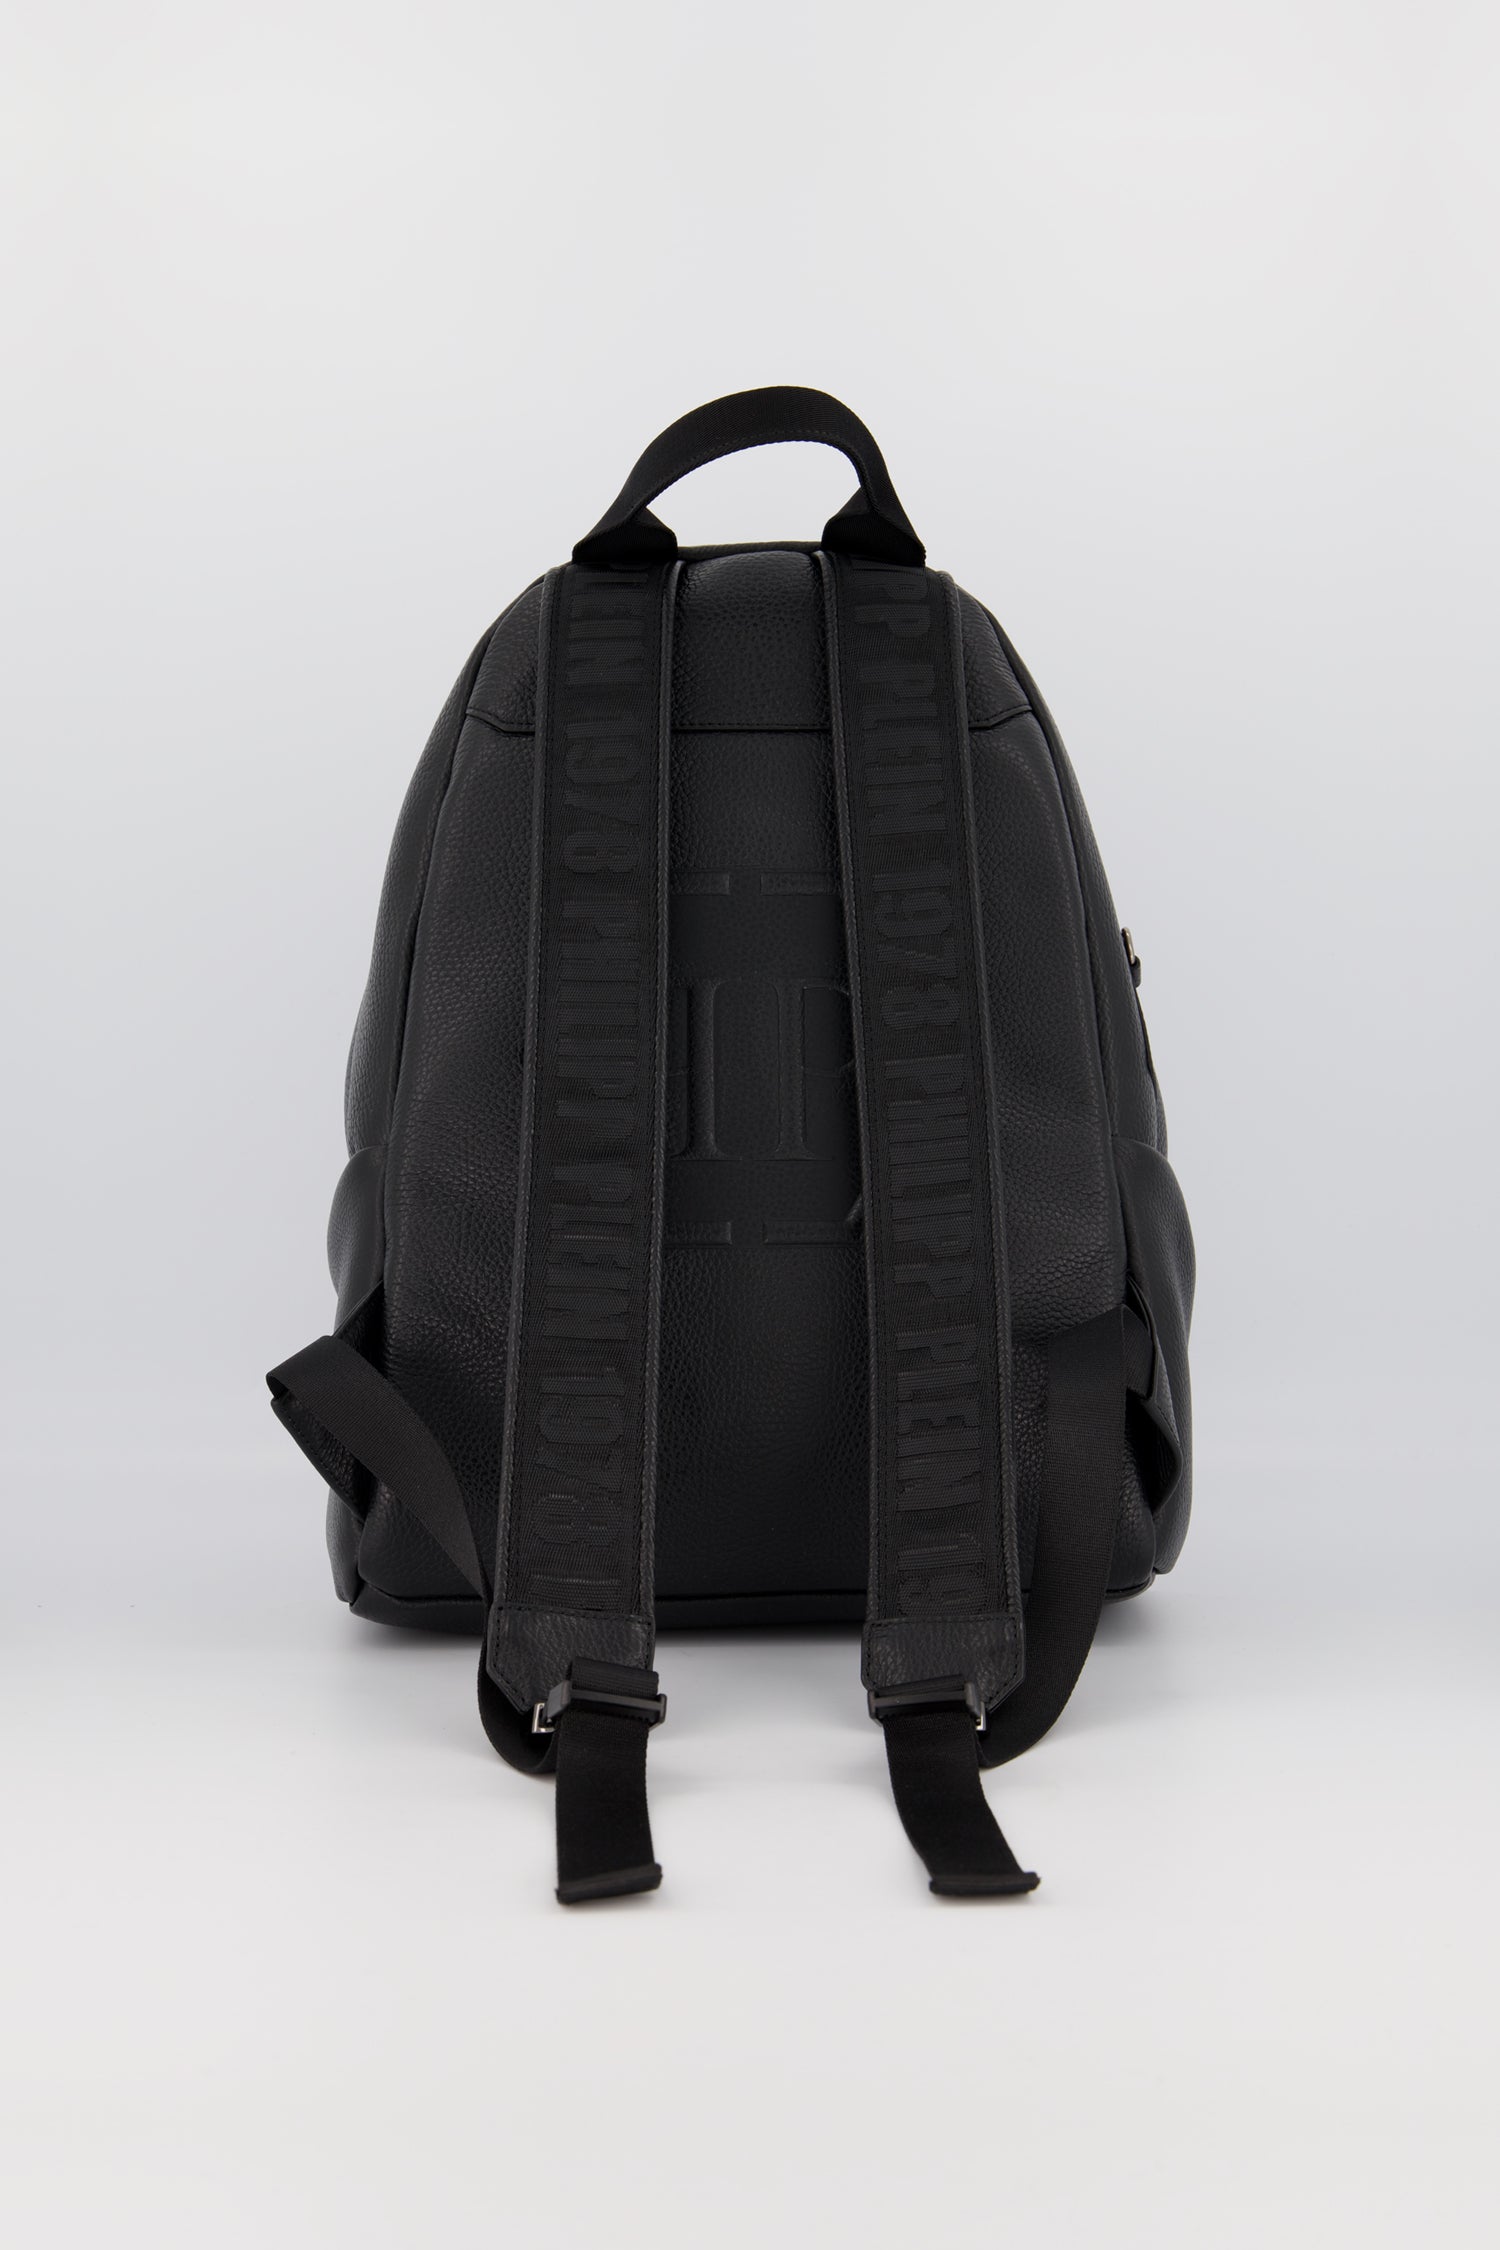 Philipp Plein Black Backpack